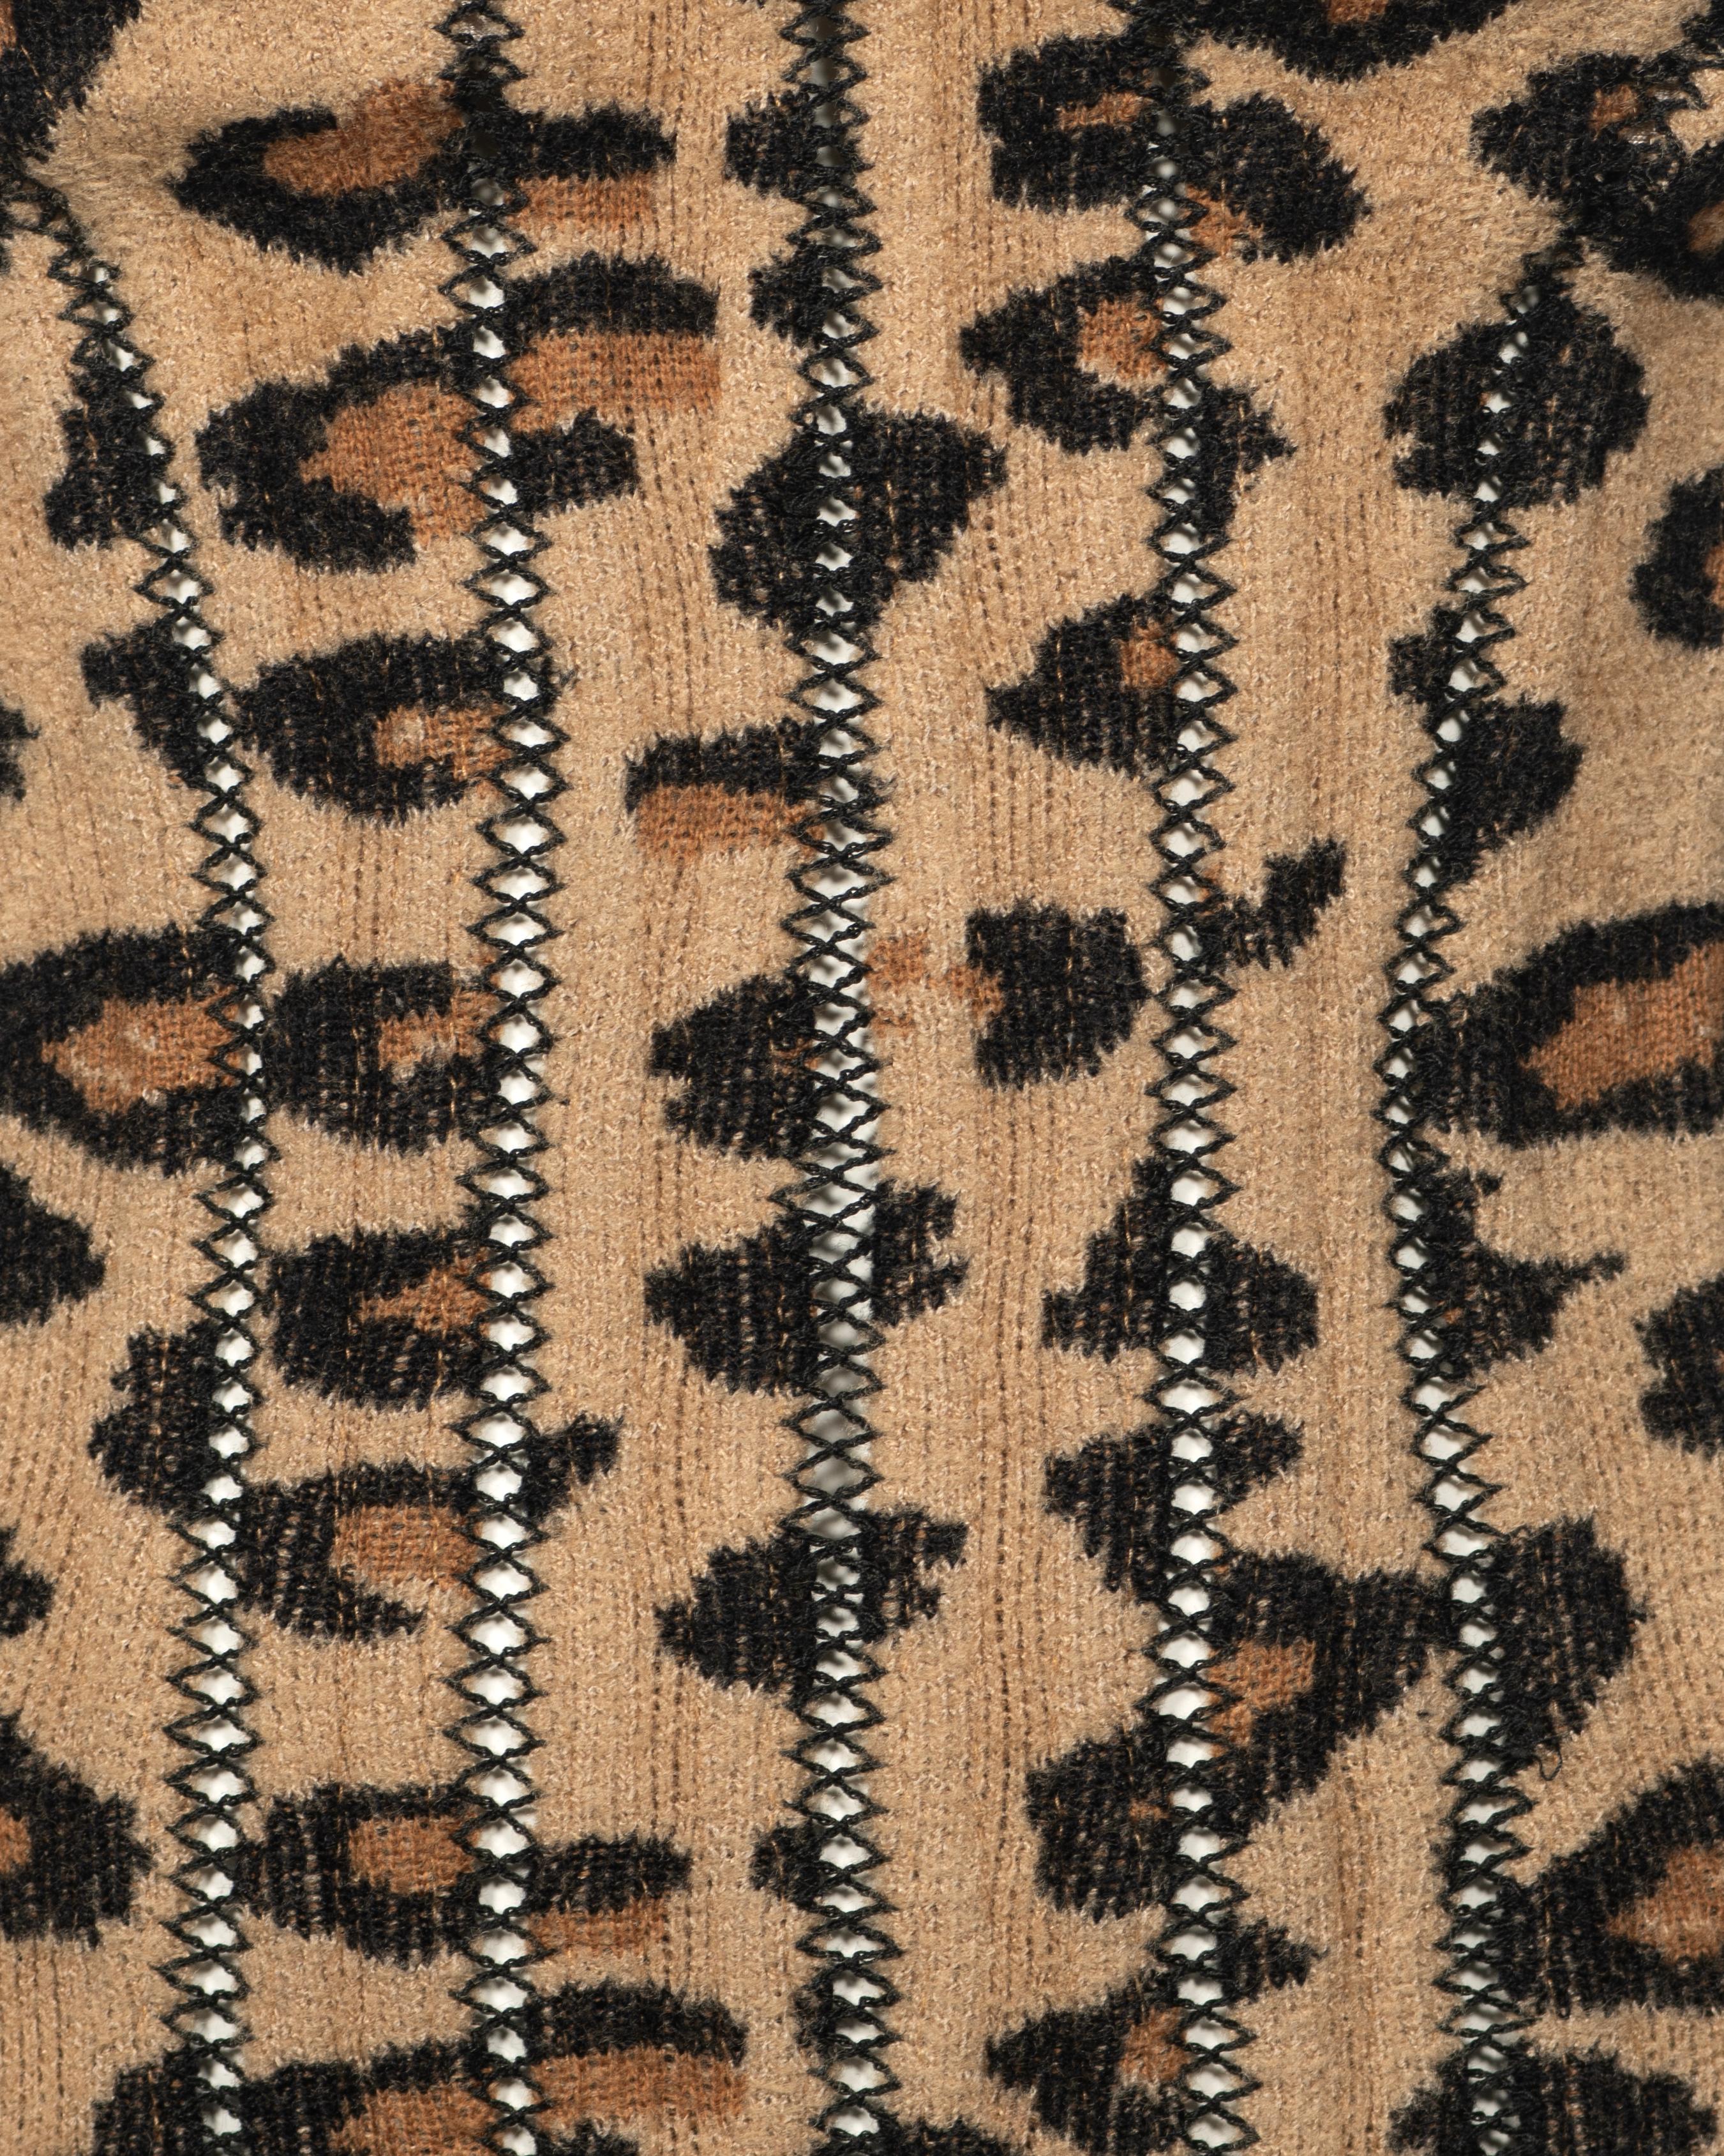 Azzedine Alaia Leopard Print Corseted Bodysuit, fw 1991 For Sale 1